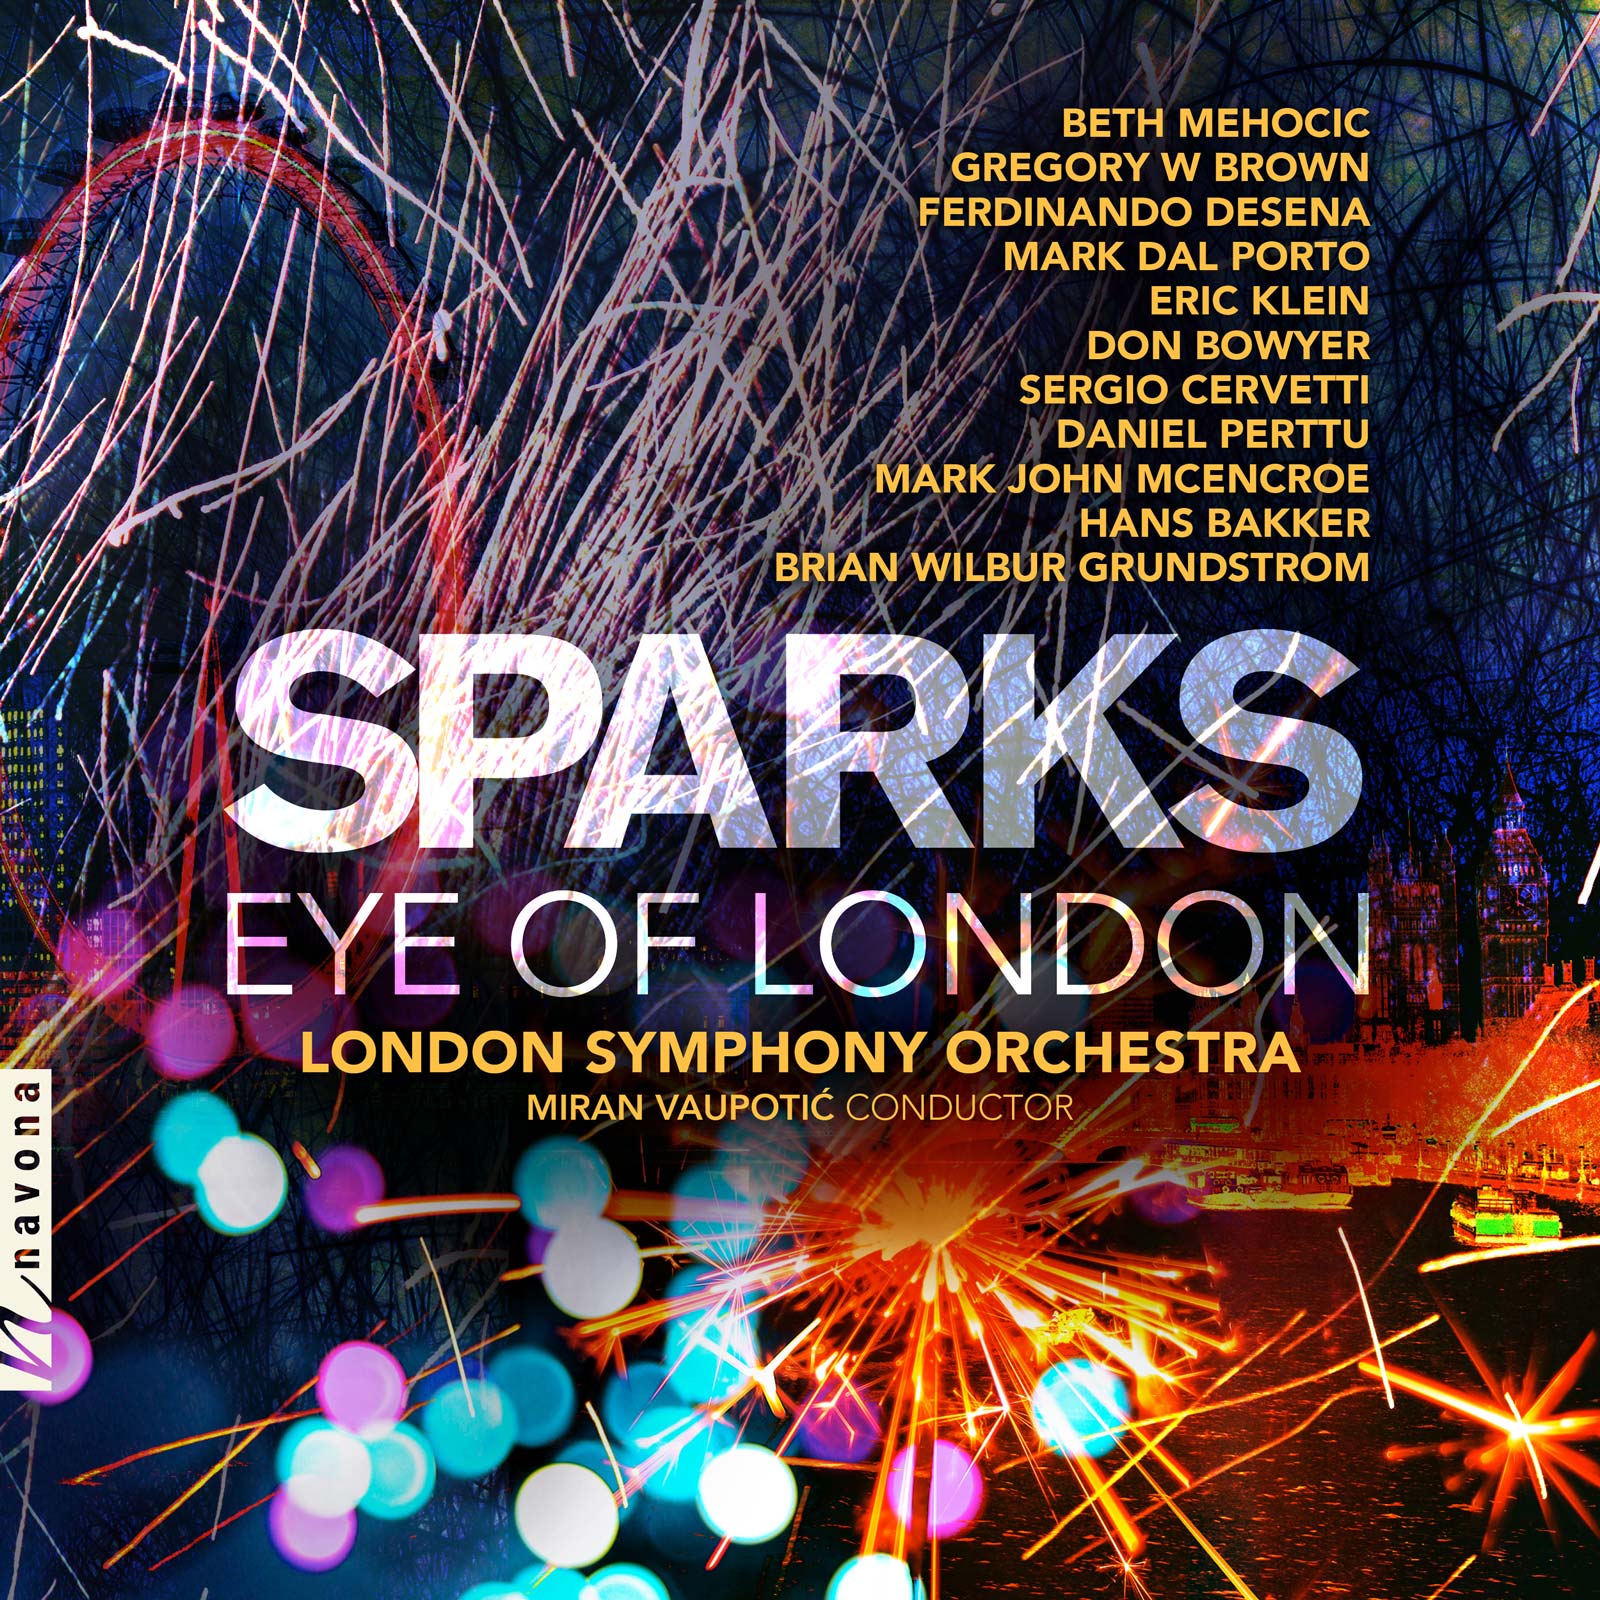 Sparks: Eye of London